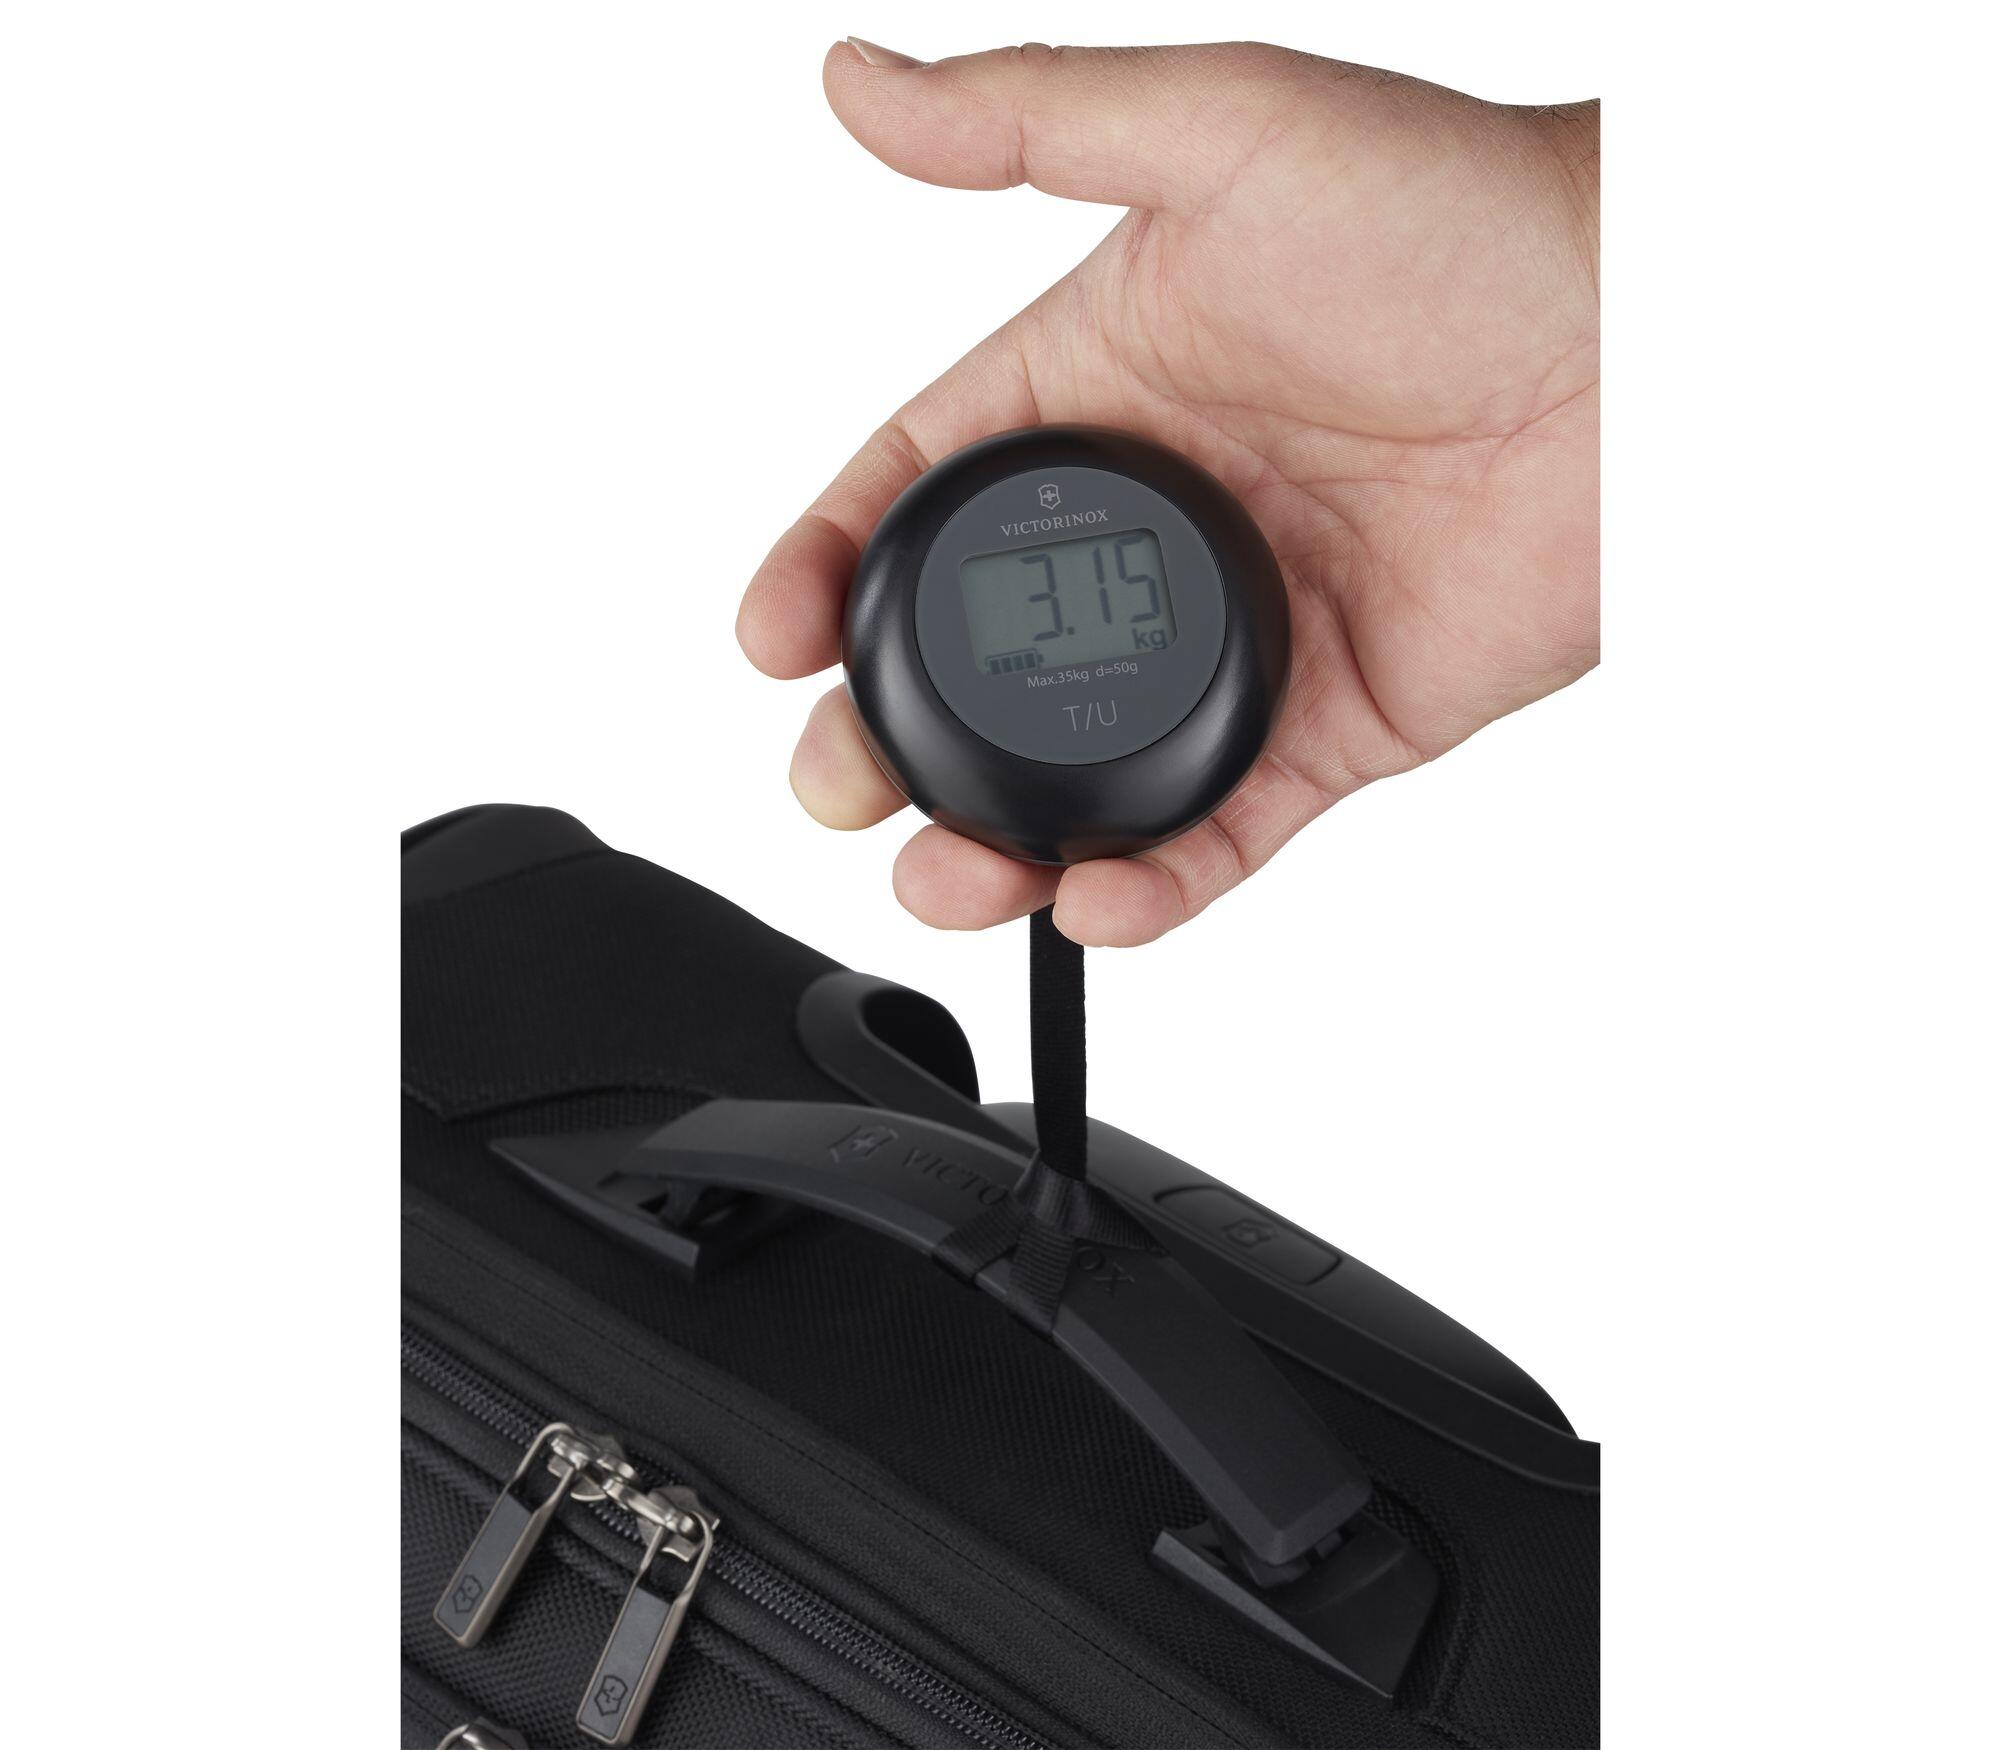 Samsonite Electronic Luggage Scale, Black, One Size